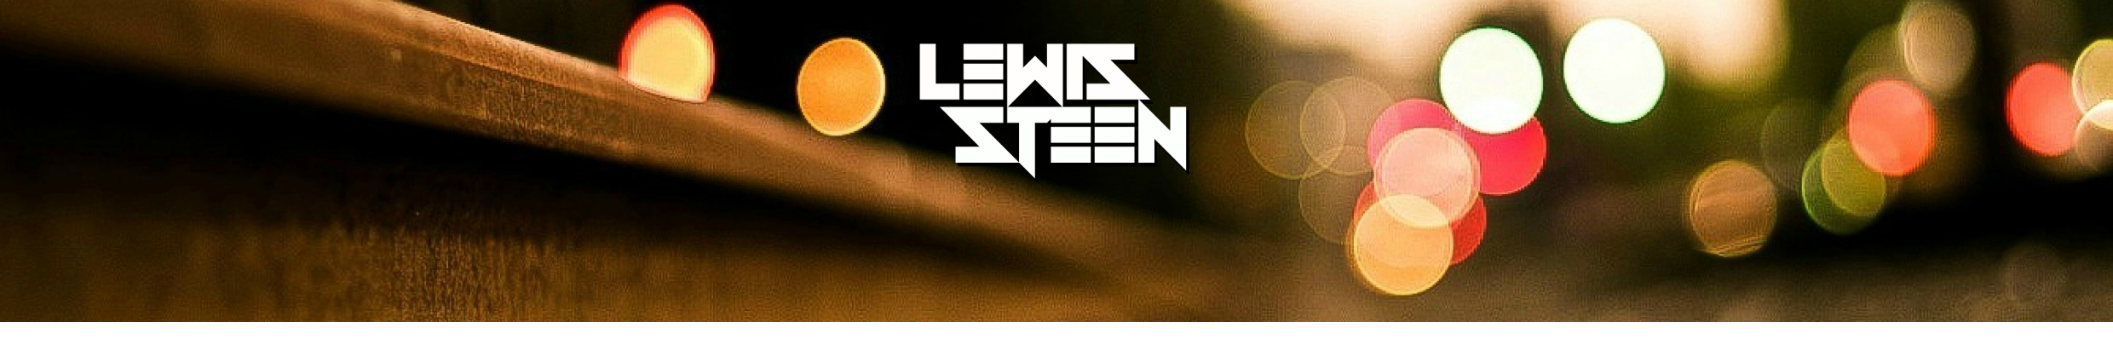 Lewis Steen